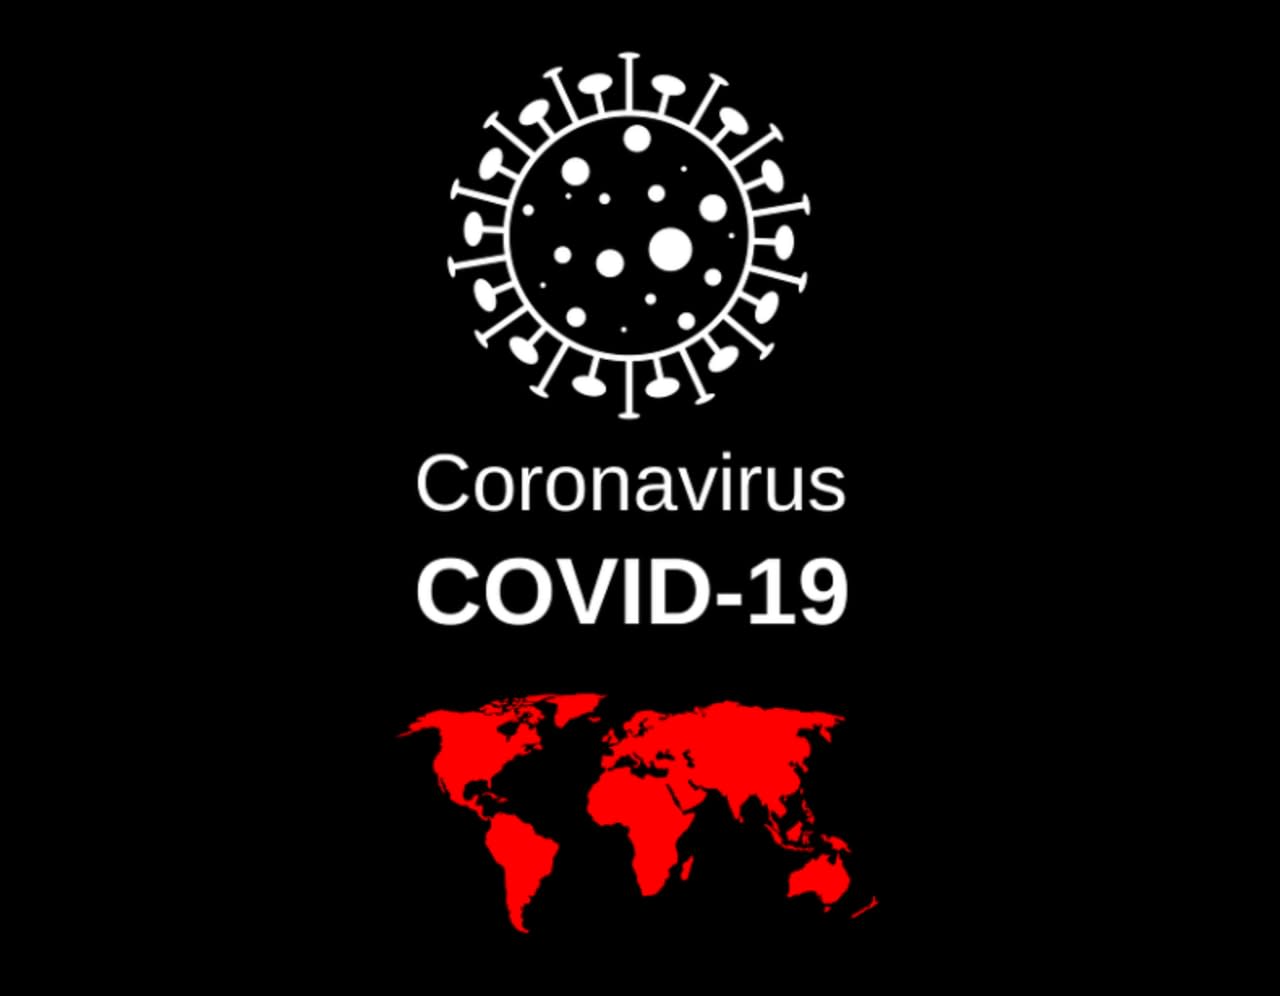 The novel strain of the coronavirus (COVID-19).